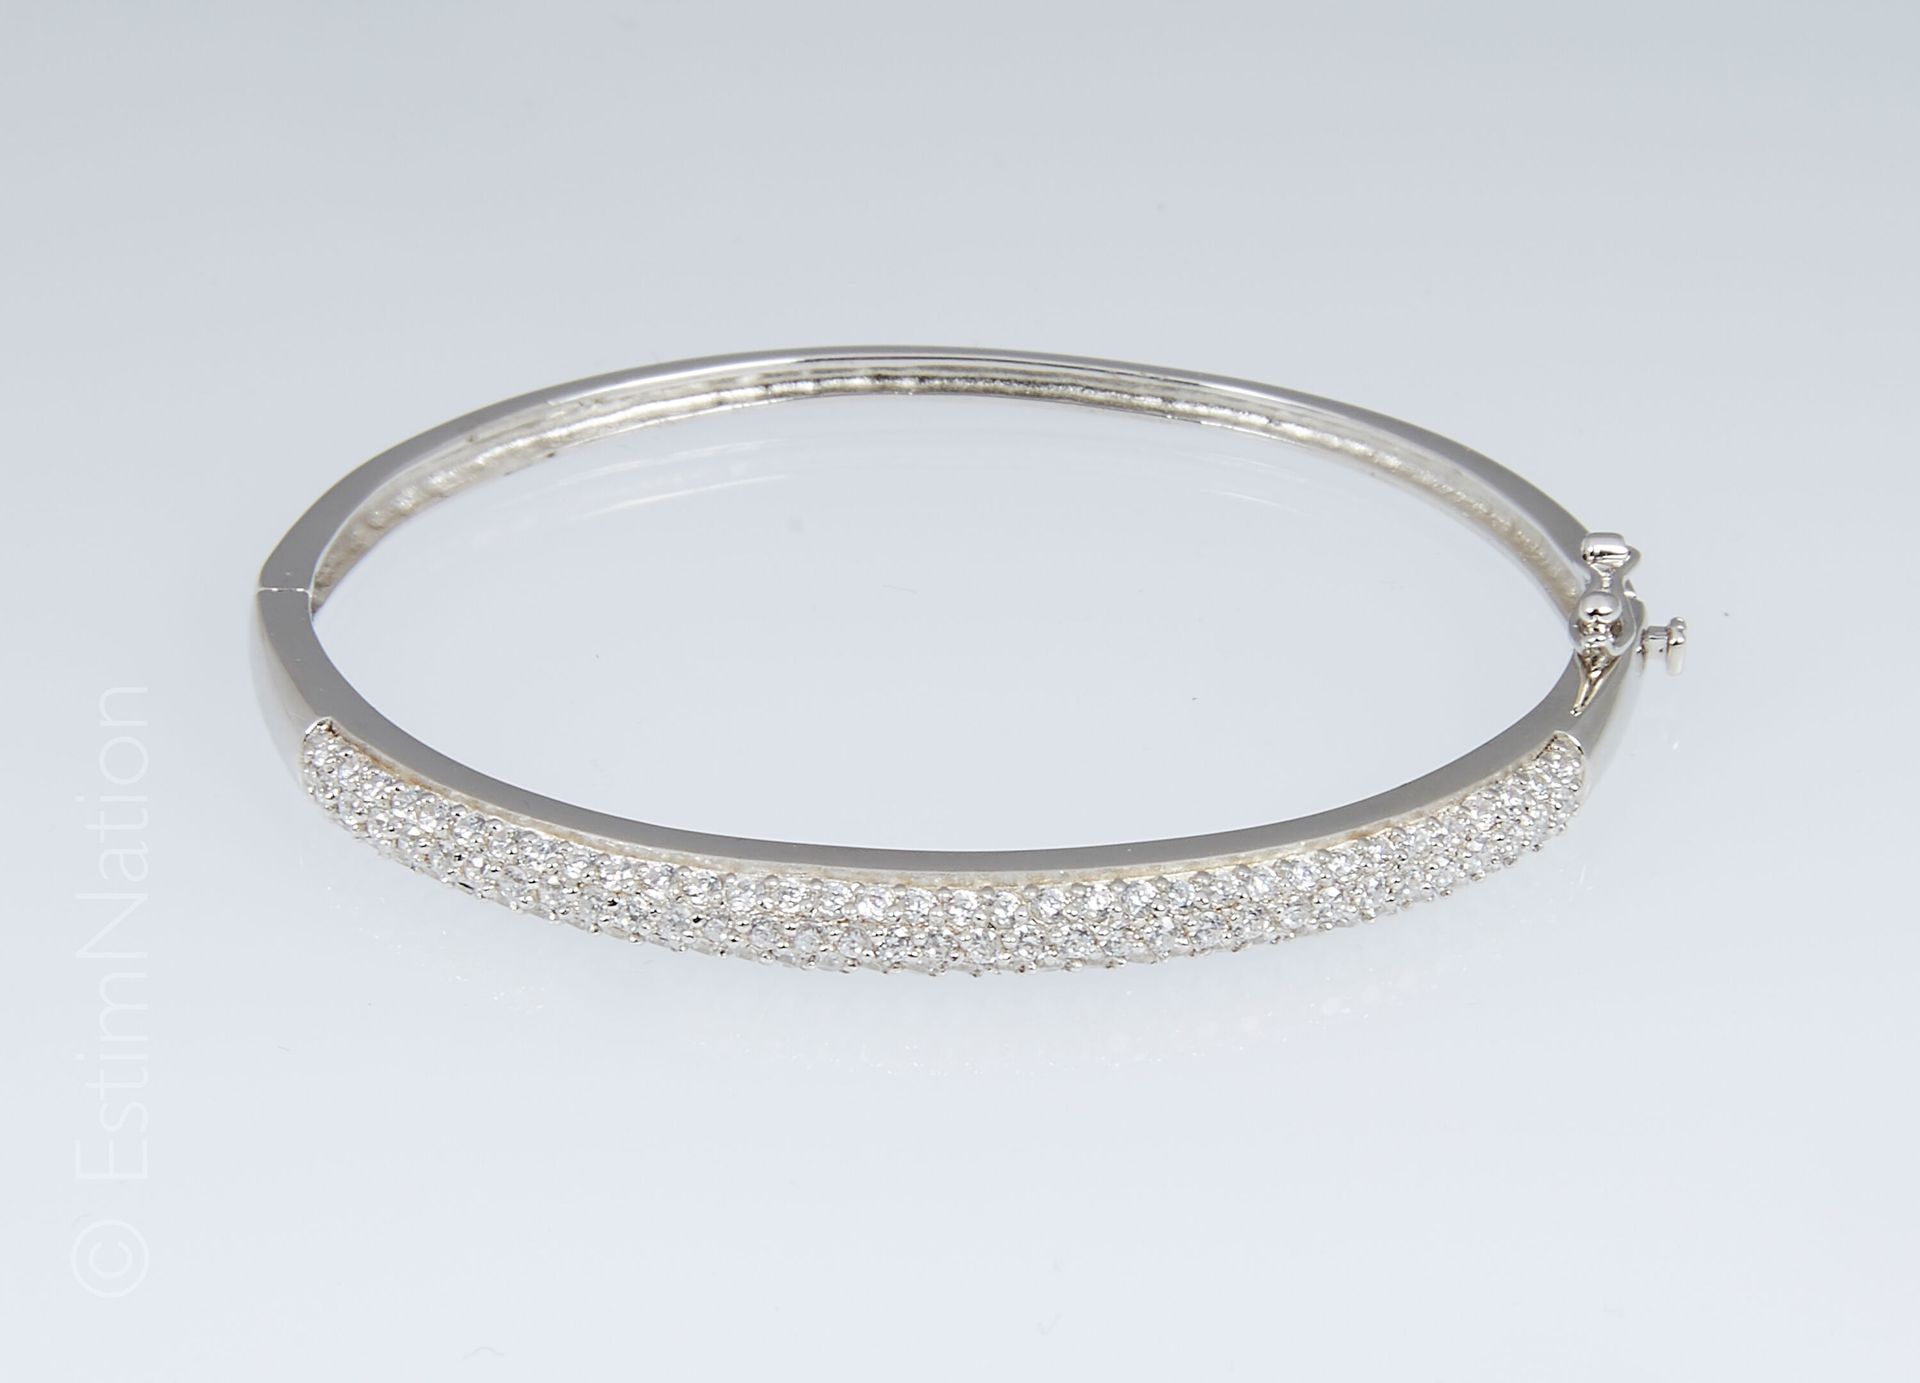 BRACELET ARGENT 
Rigid bracelet opening in silver (925 thousandths) decorated wi&hellip;